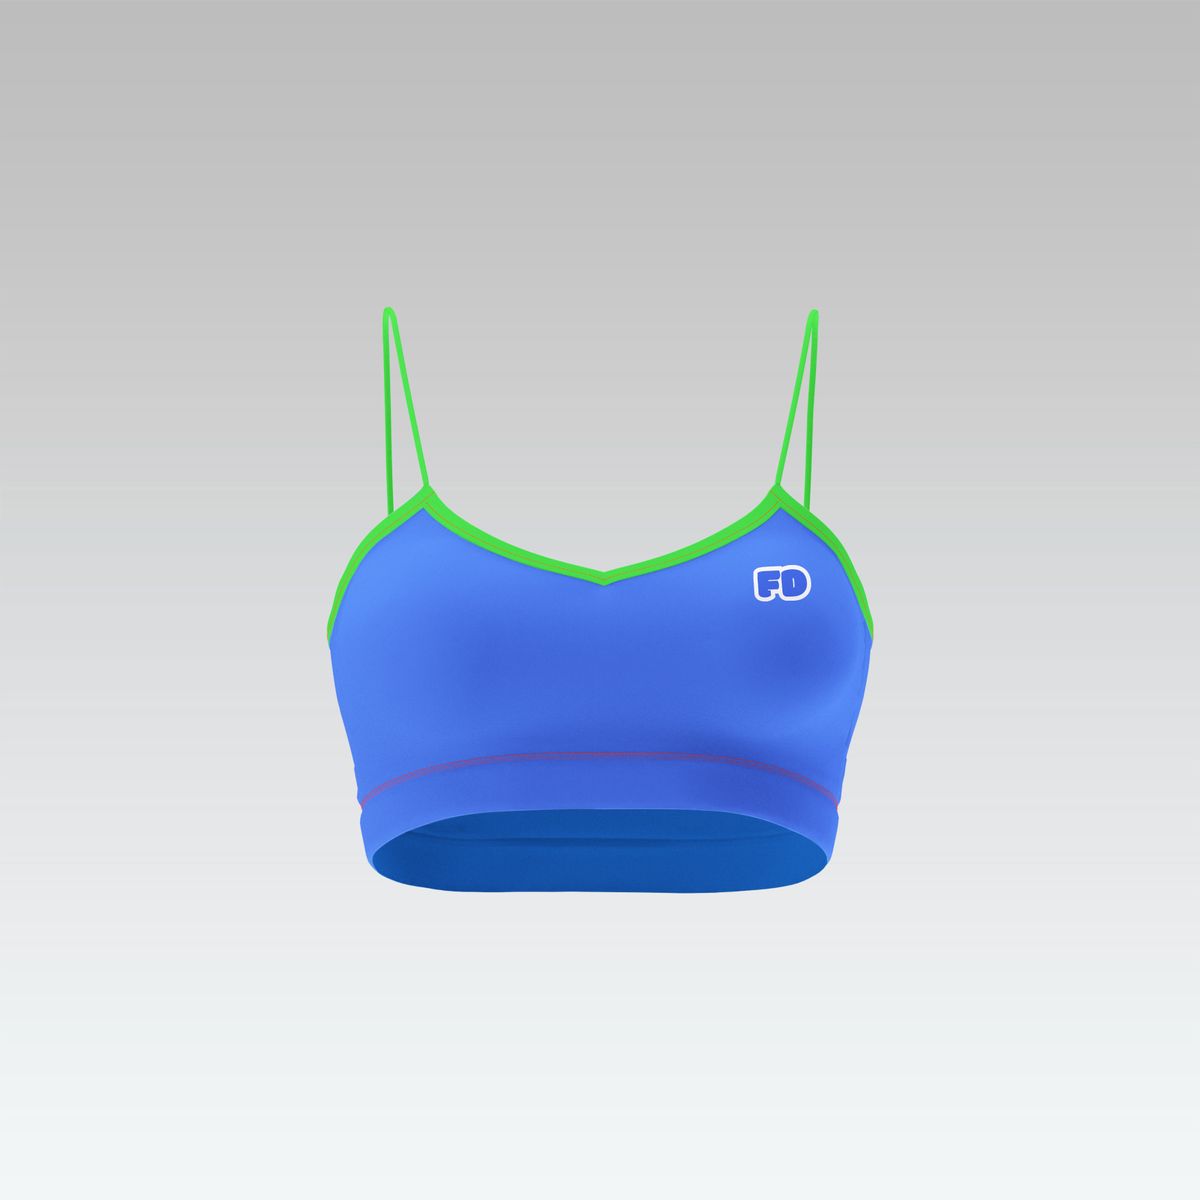 Free Vectors  Flat sports bra icon set: light blue